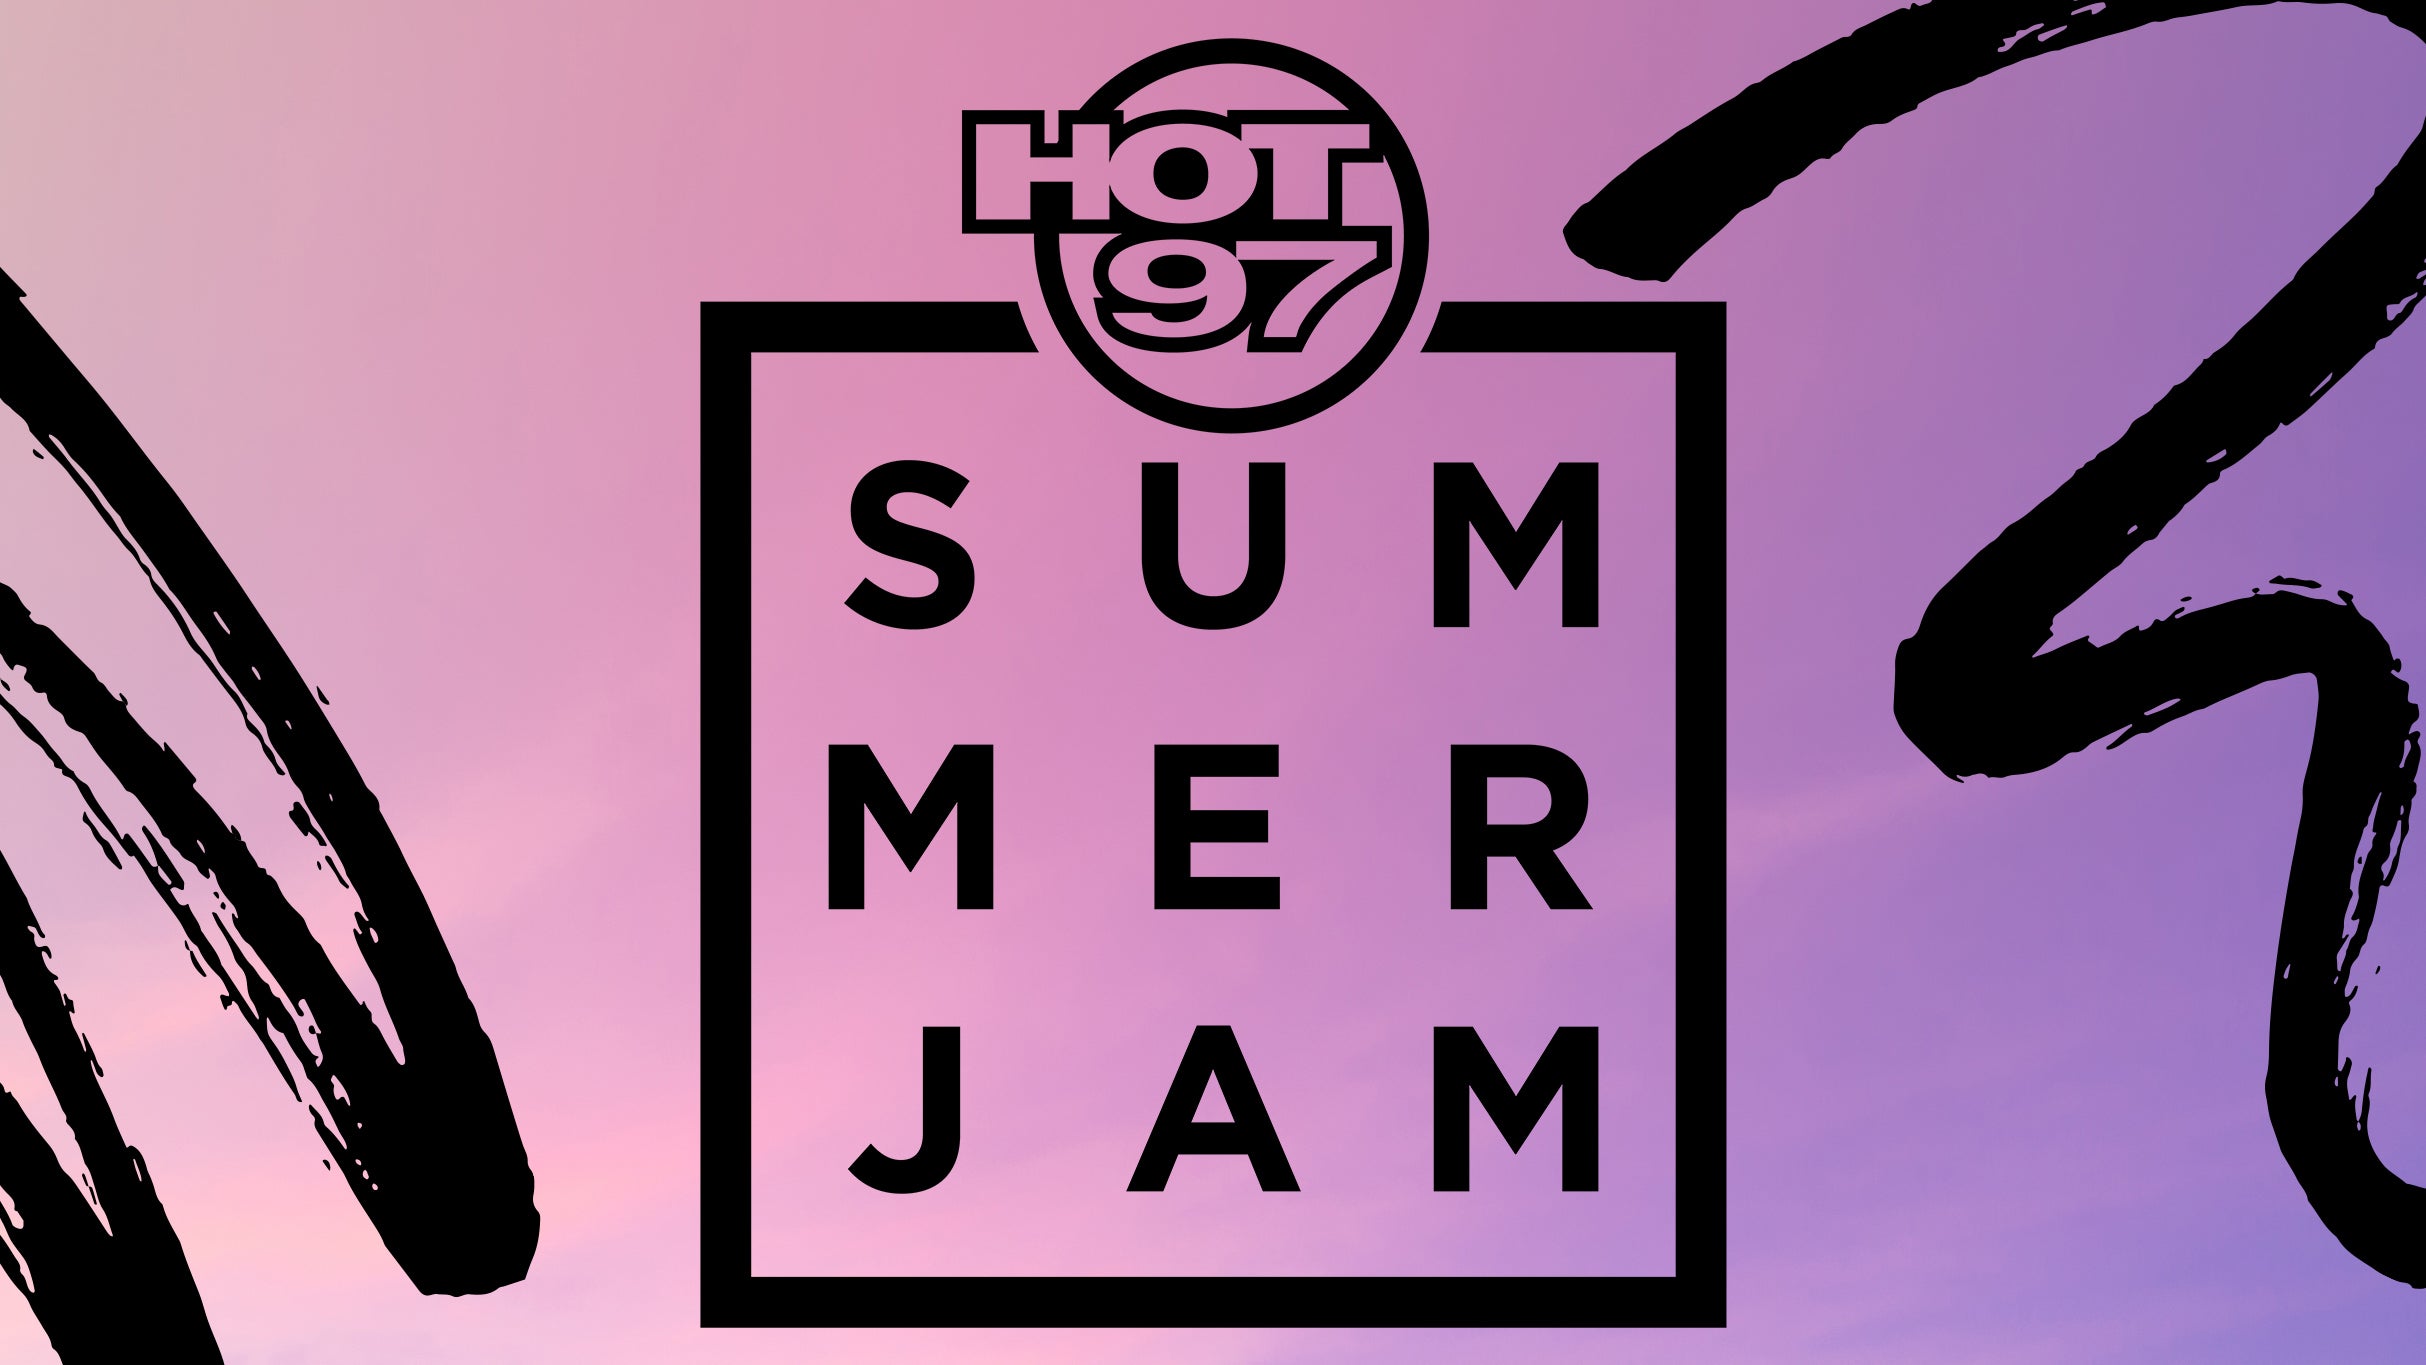 HOT 97 Summer Jam pre-sale code